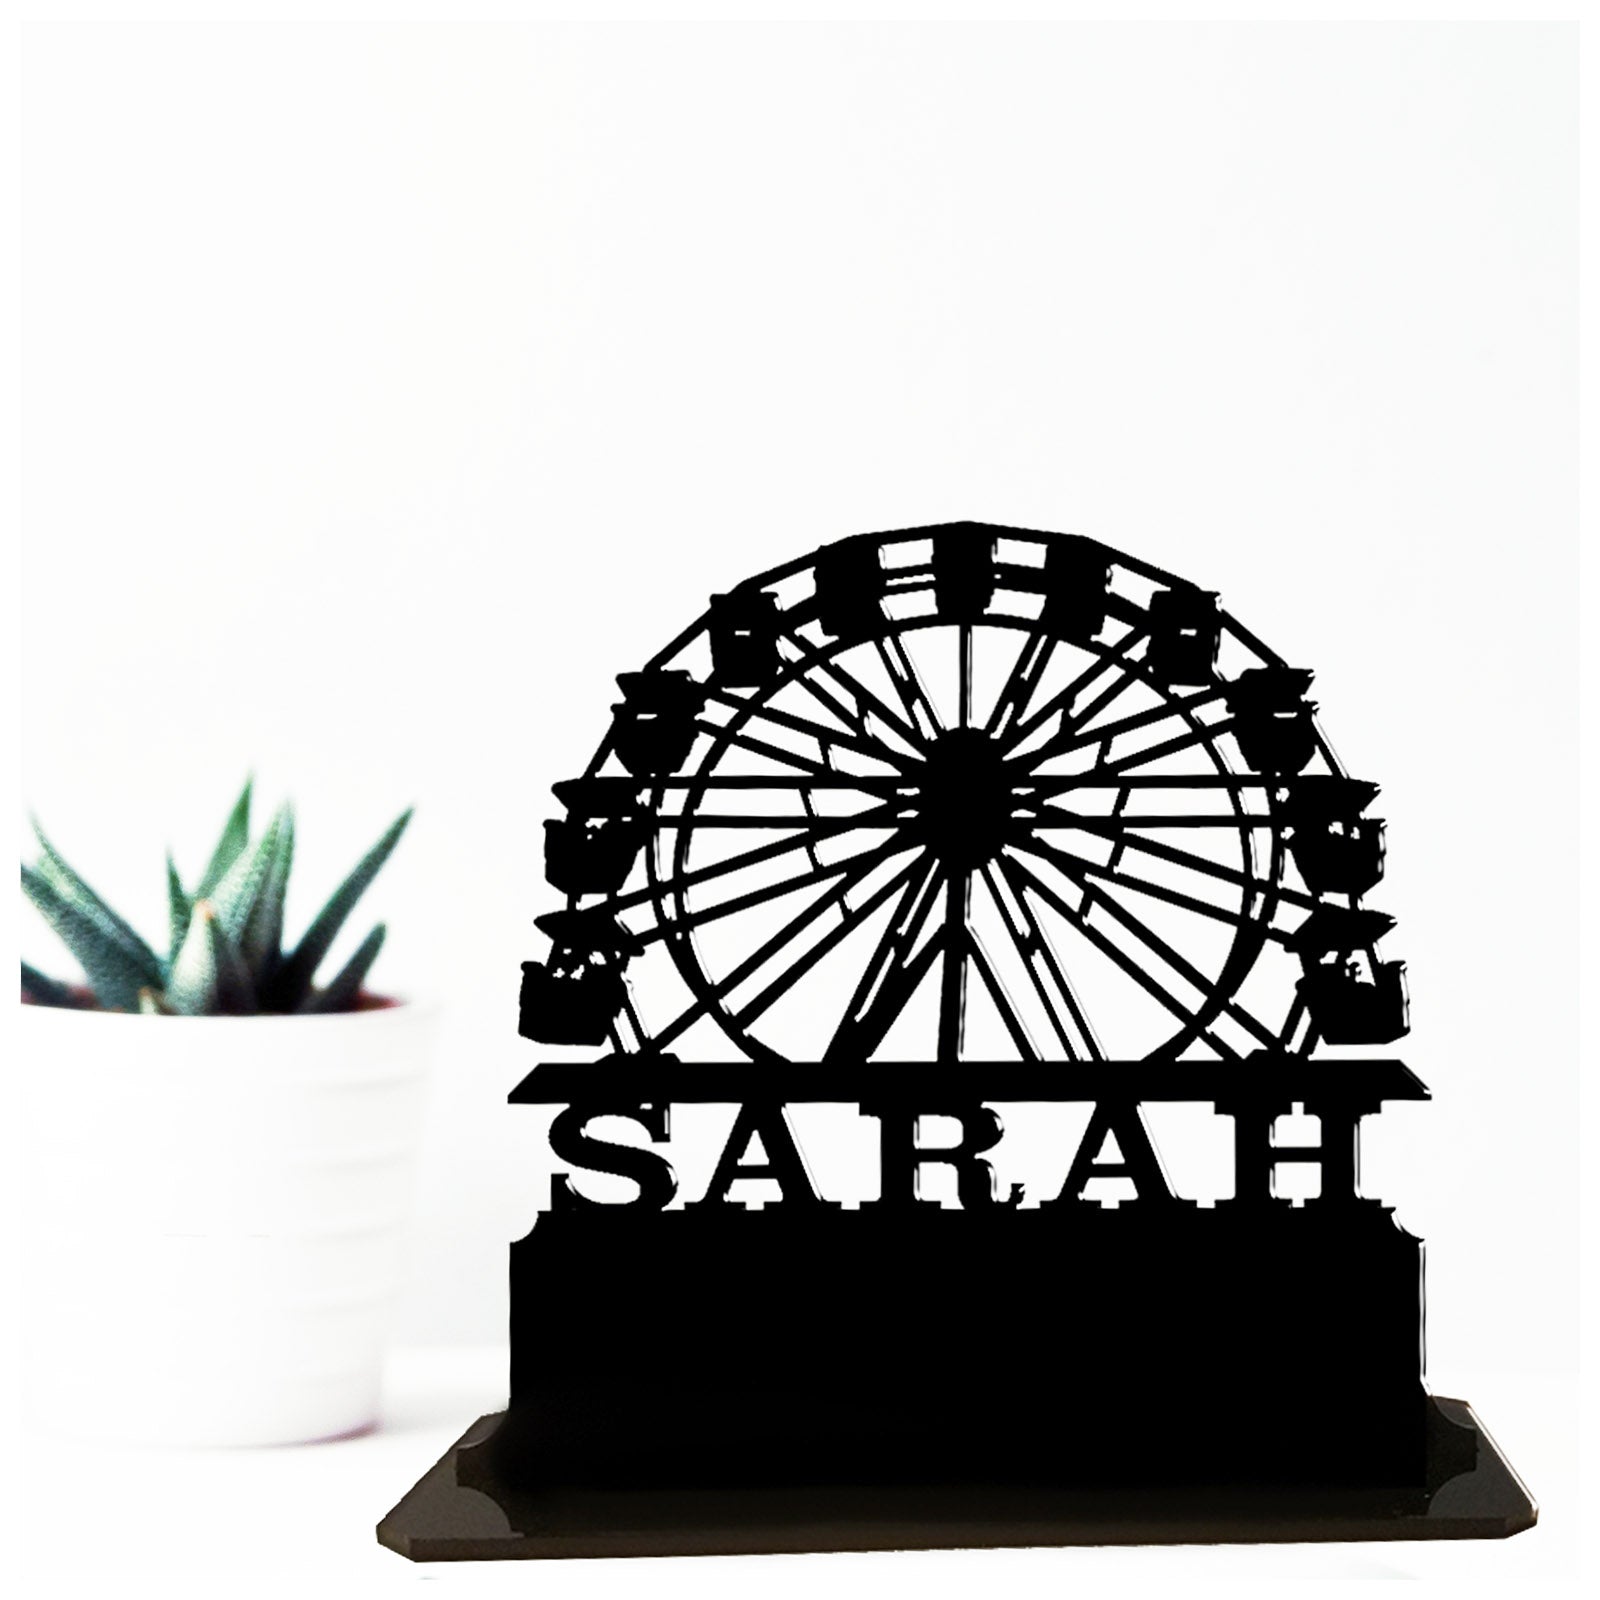 Acrylic personalized ferris wheel gift ideas. Standalone keepsake ornaments.